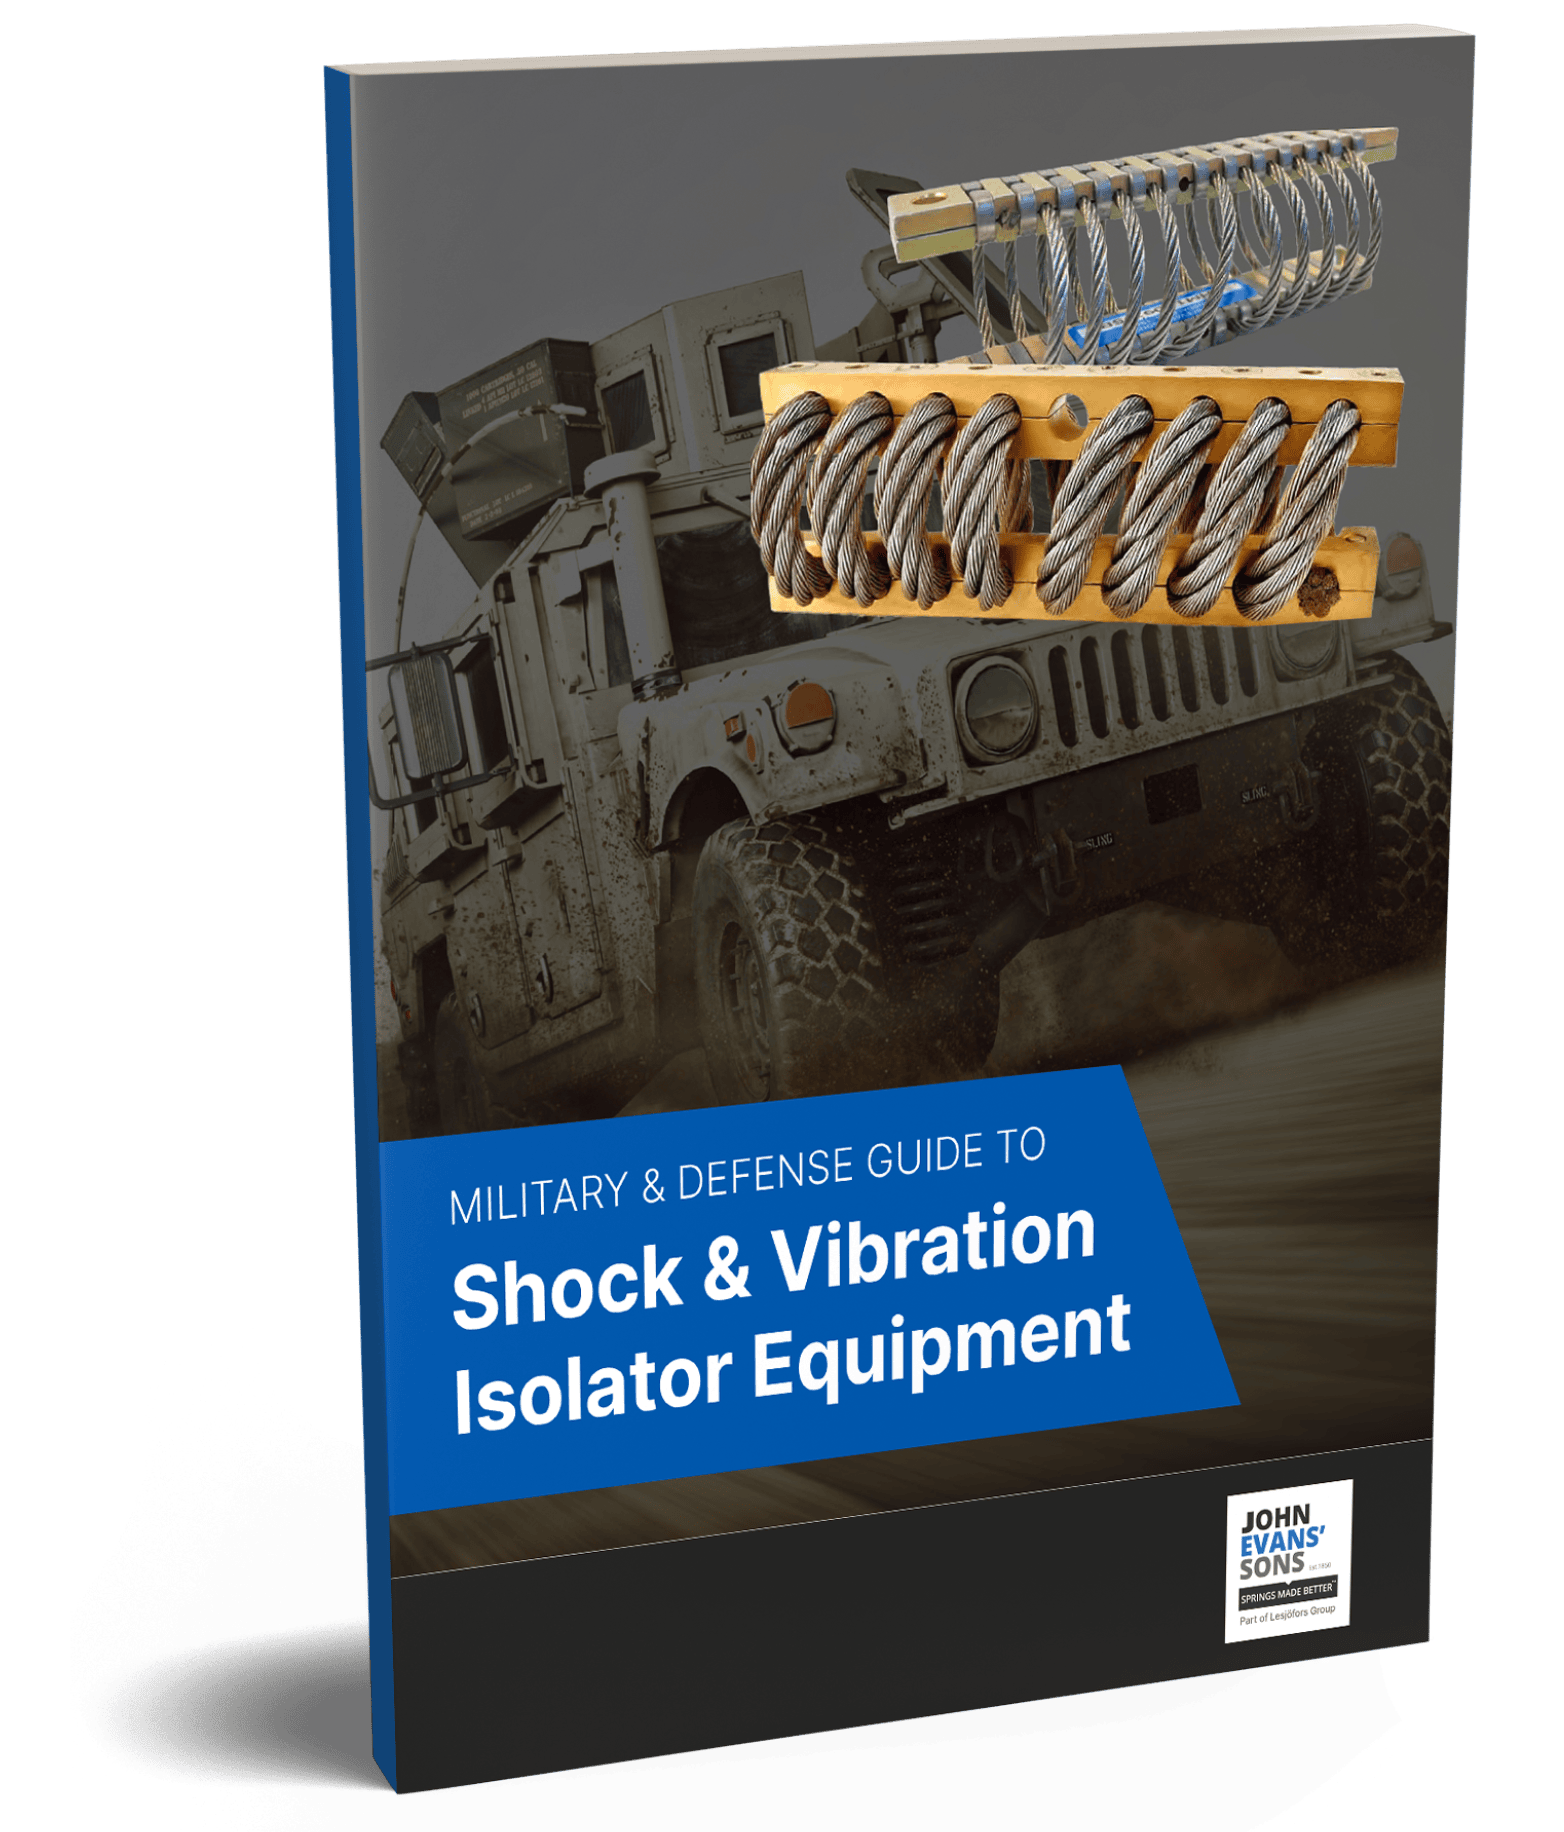 Military & Defense Guide to Shock & Vibration Isolator Equipment